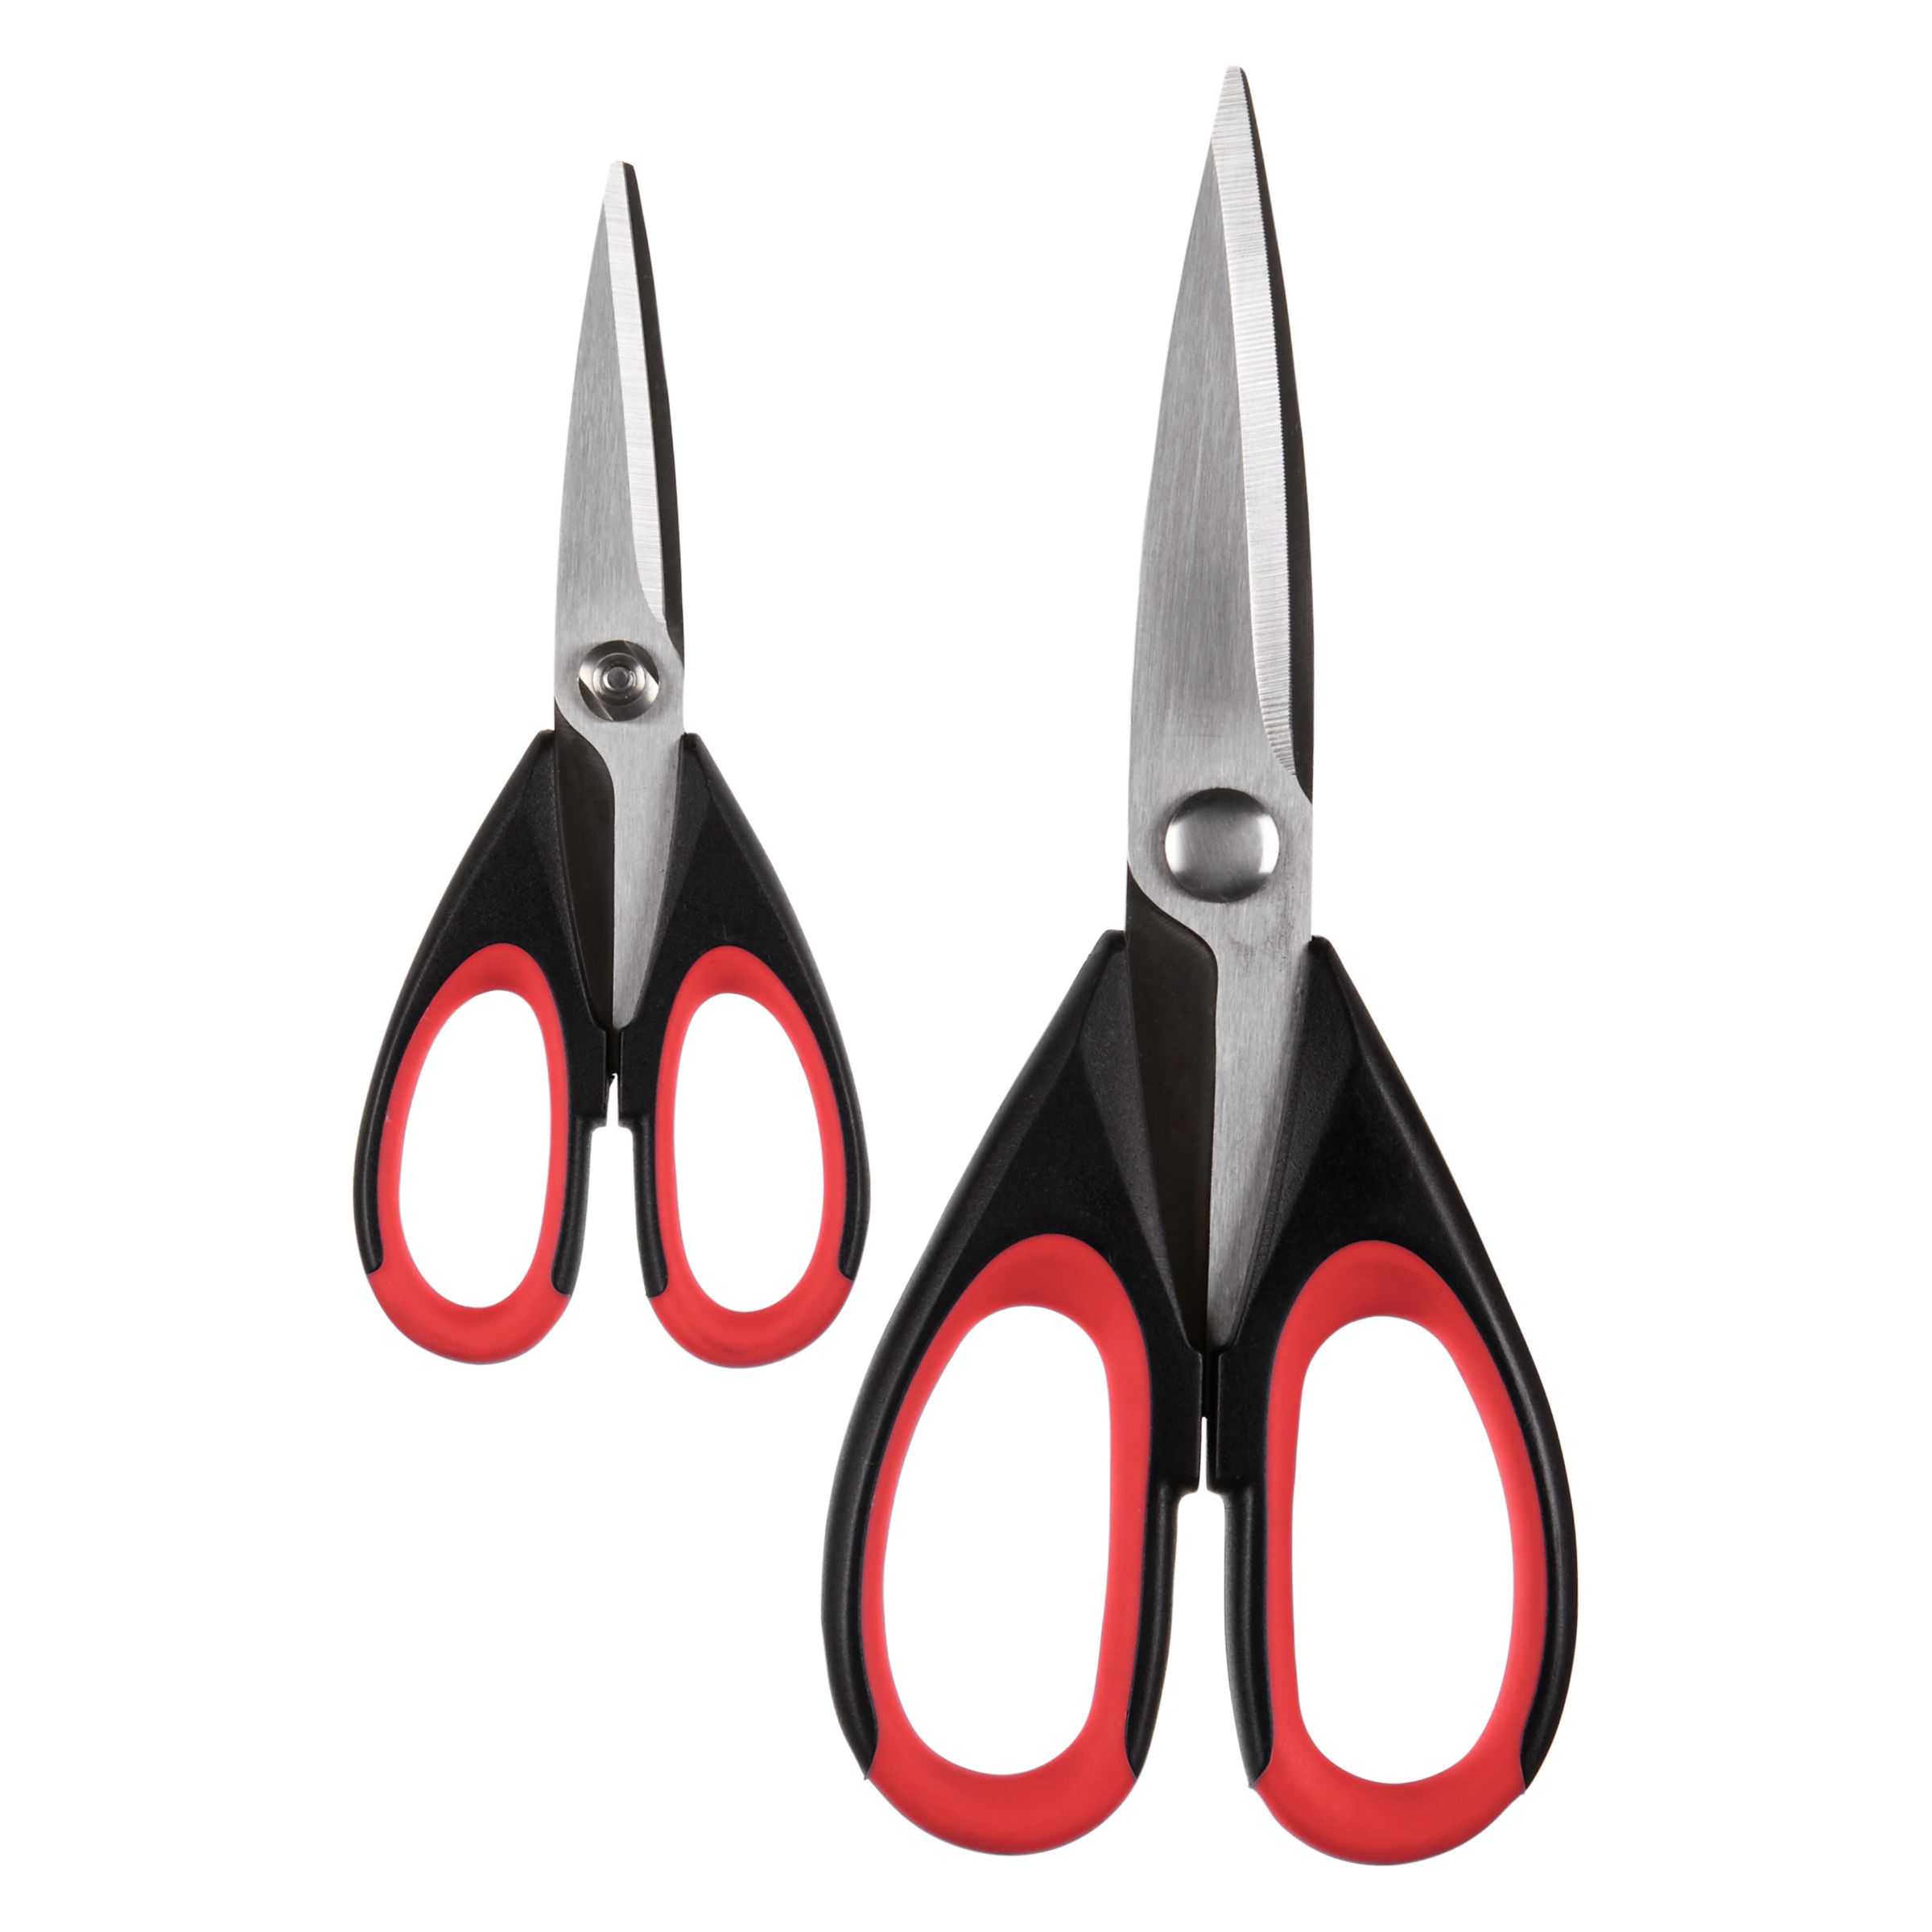 John Lewis & Partners Scissors Set, 2 Pieces, Red